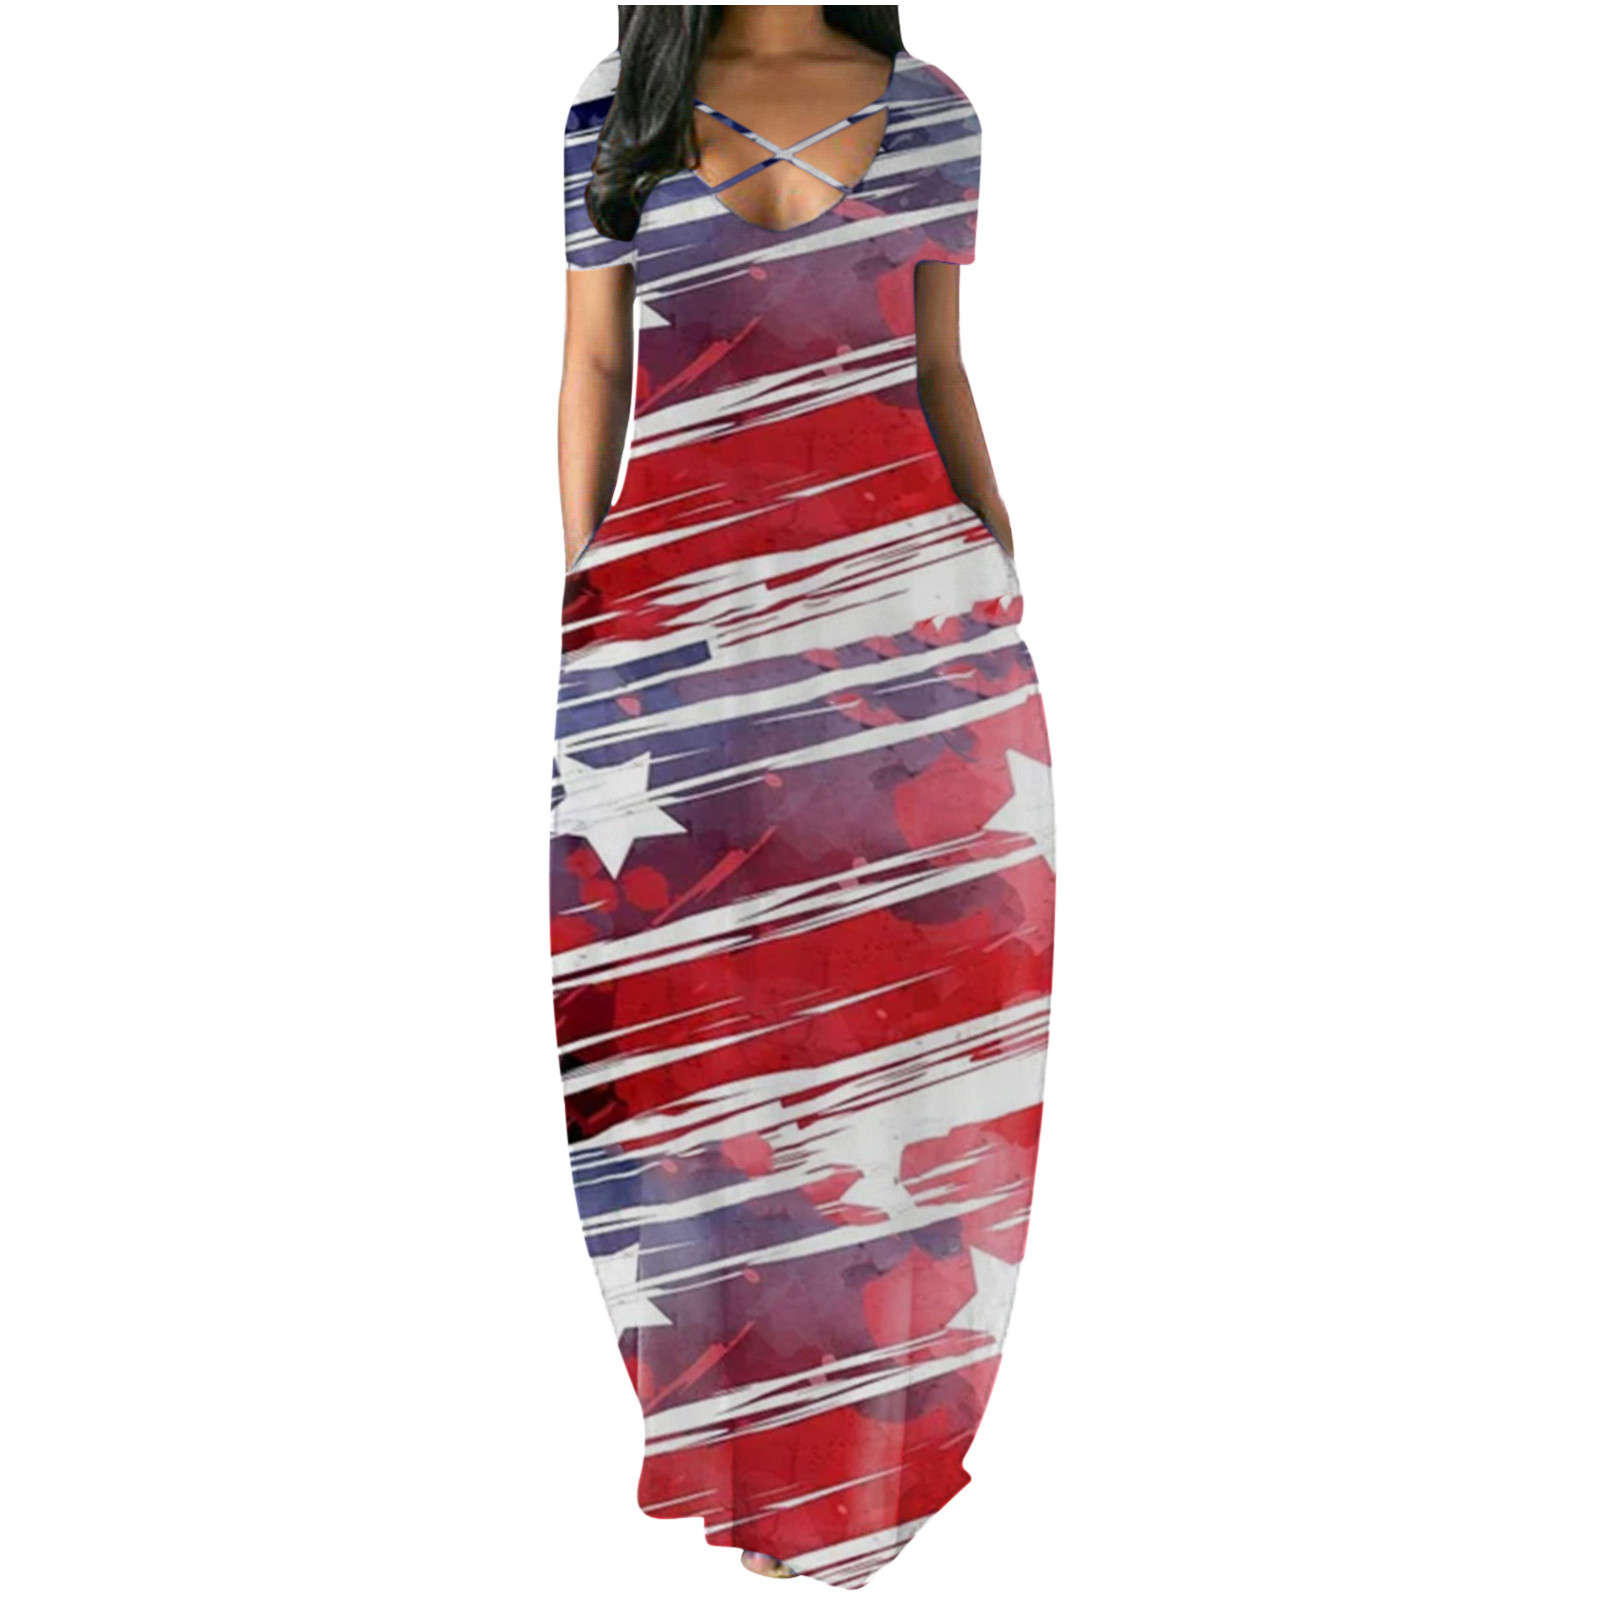 Womens Summer Casual Sleeveless Striped Beach Swing Midi Dress Size 10 12 14 New